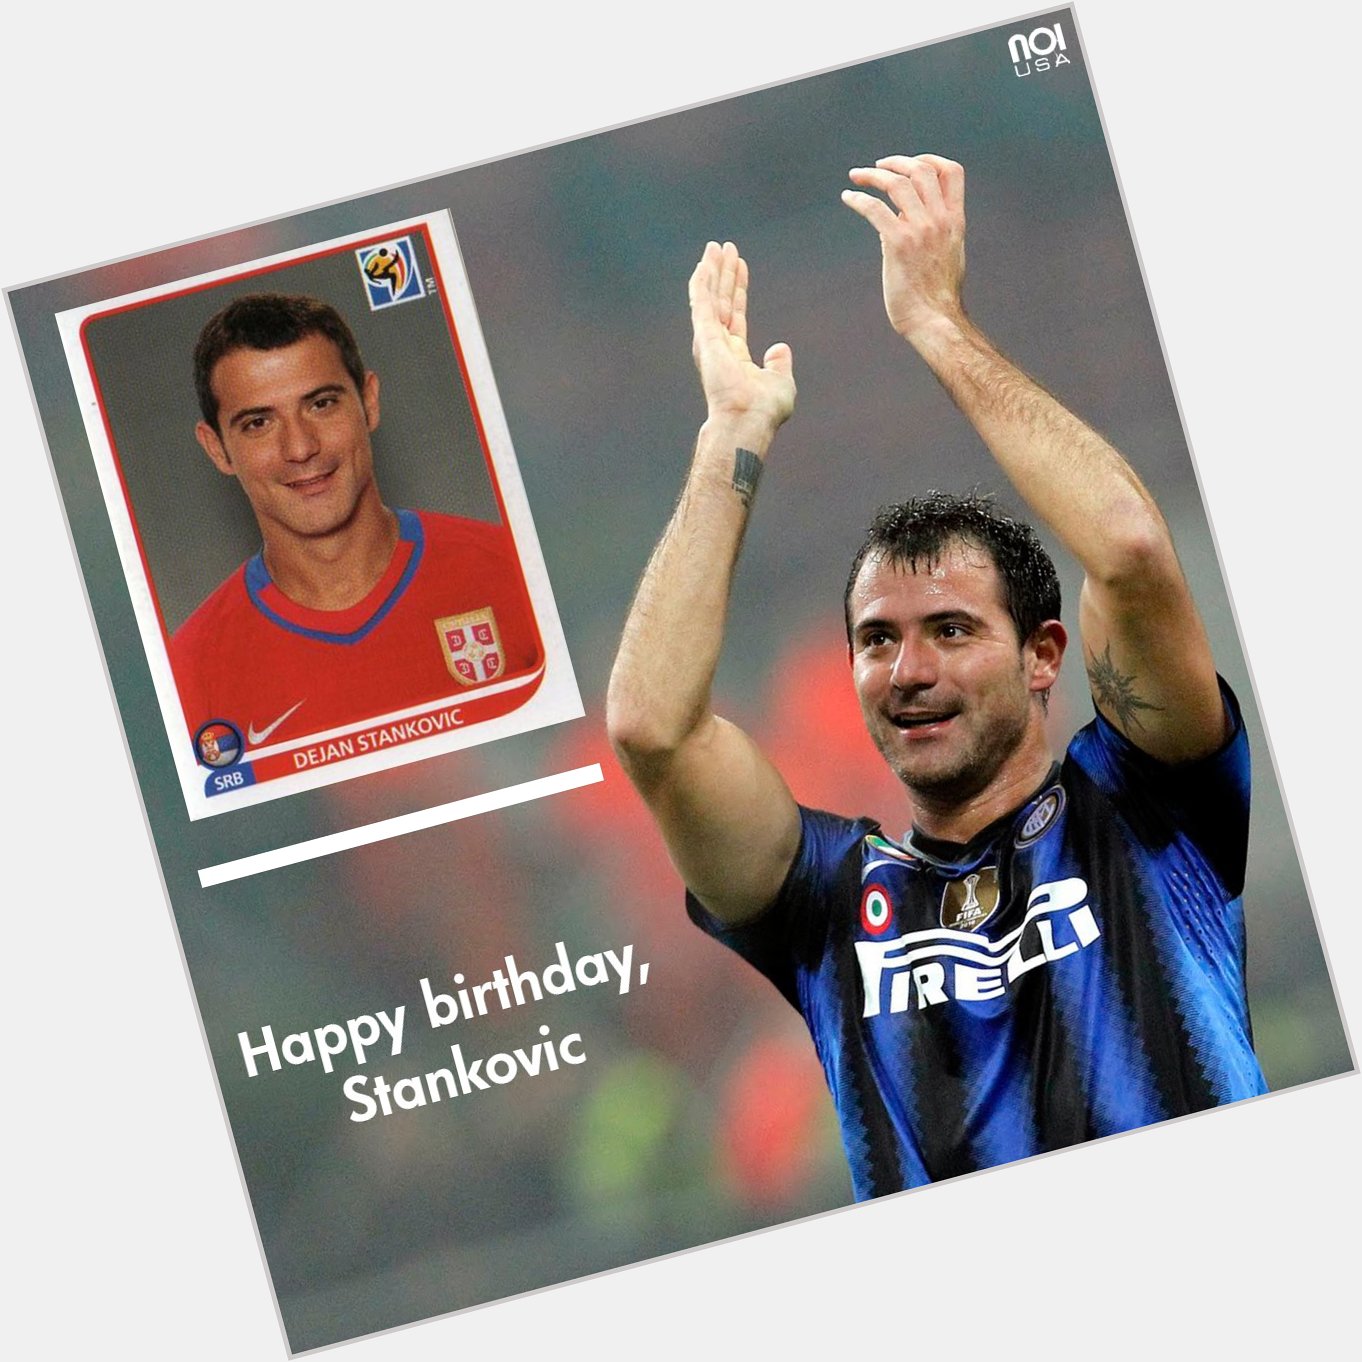 Happy birthday to Dejan Stankovic!!! Inter and Serbia legend!!! 